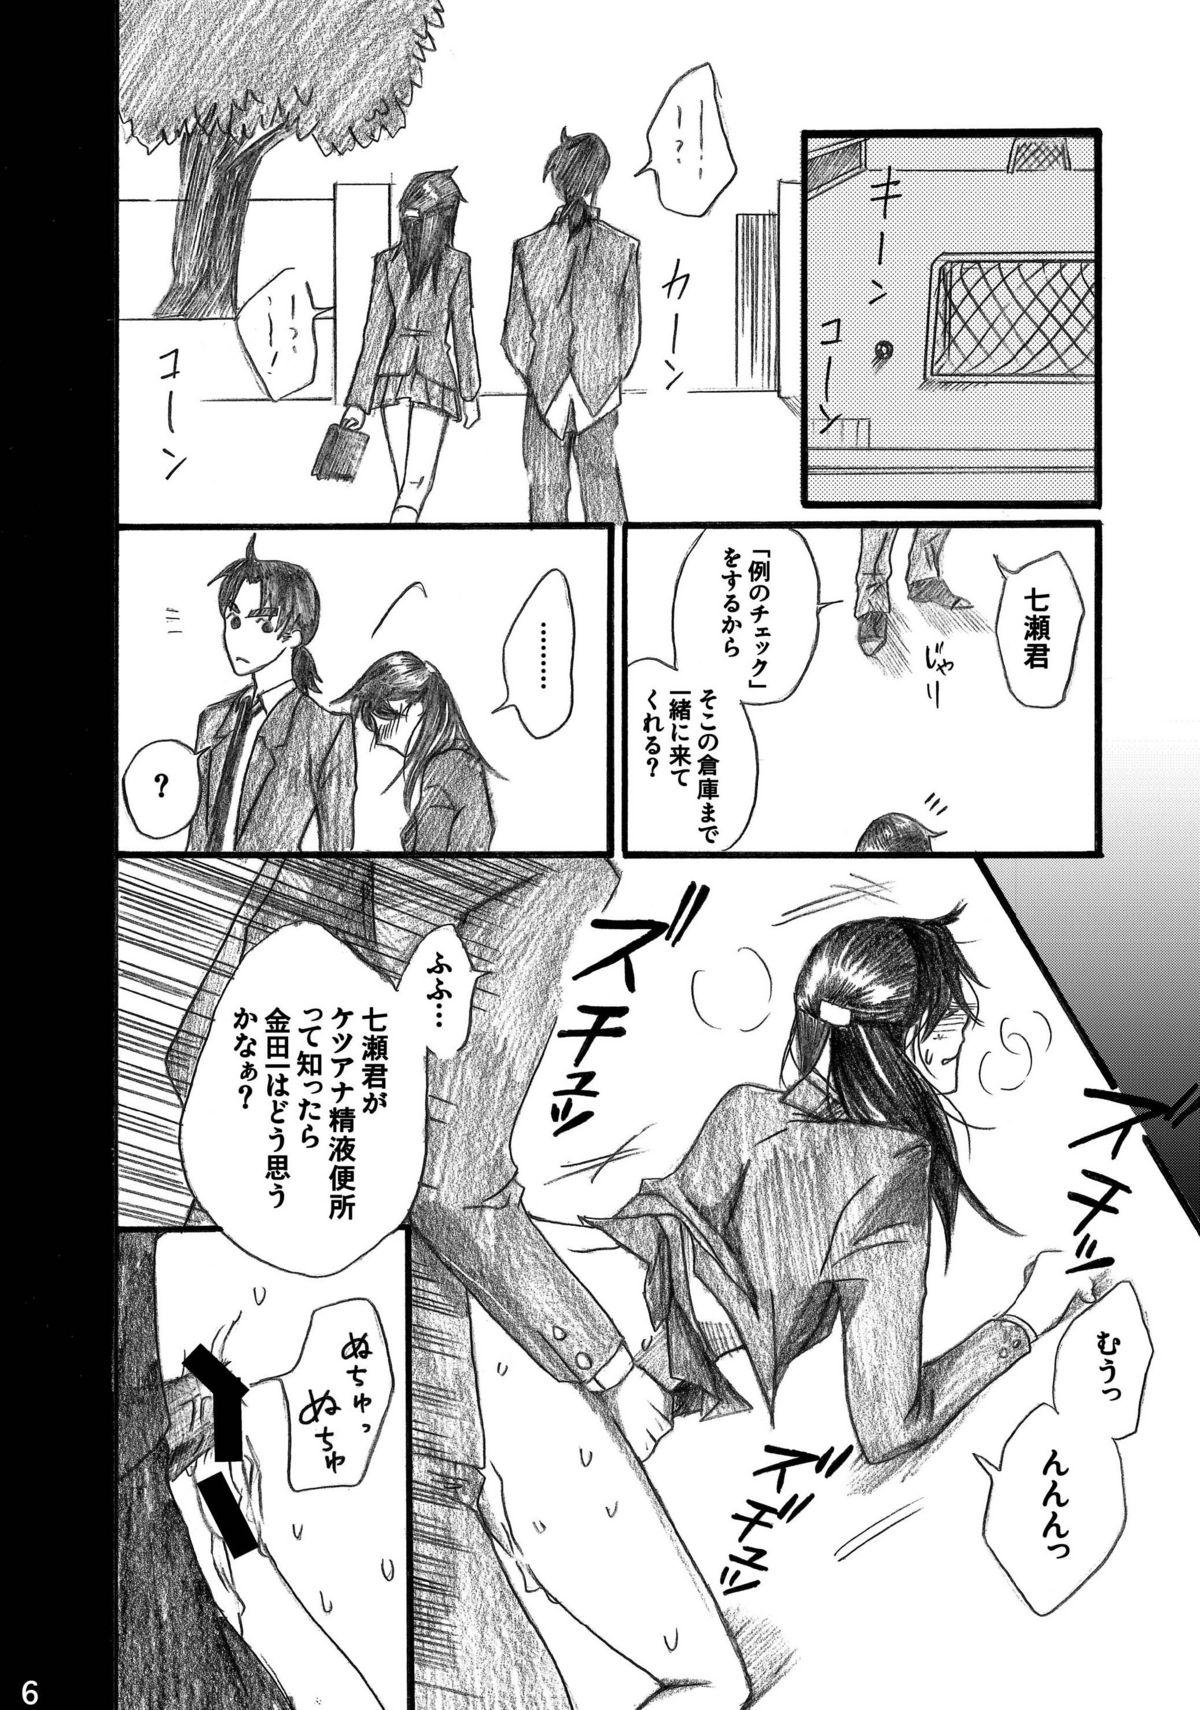 Pounding Nanase Shoujo no Jikenbo Case 4 - Kindaichi shounen no jikenbo Gay Group - Page 6